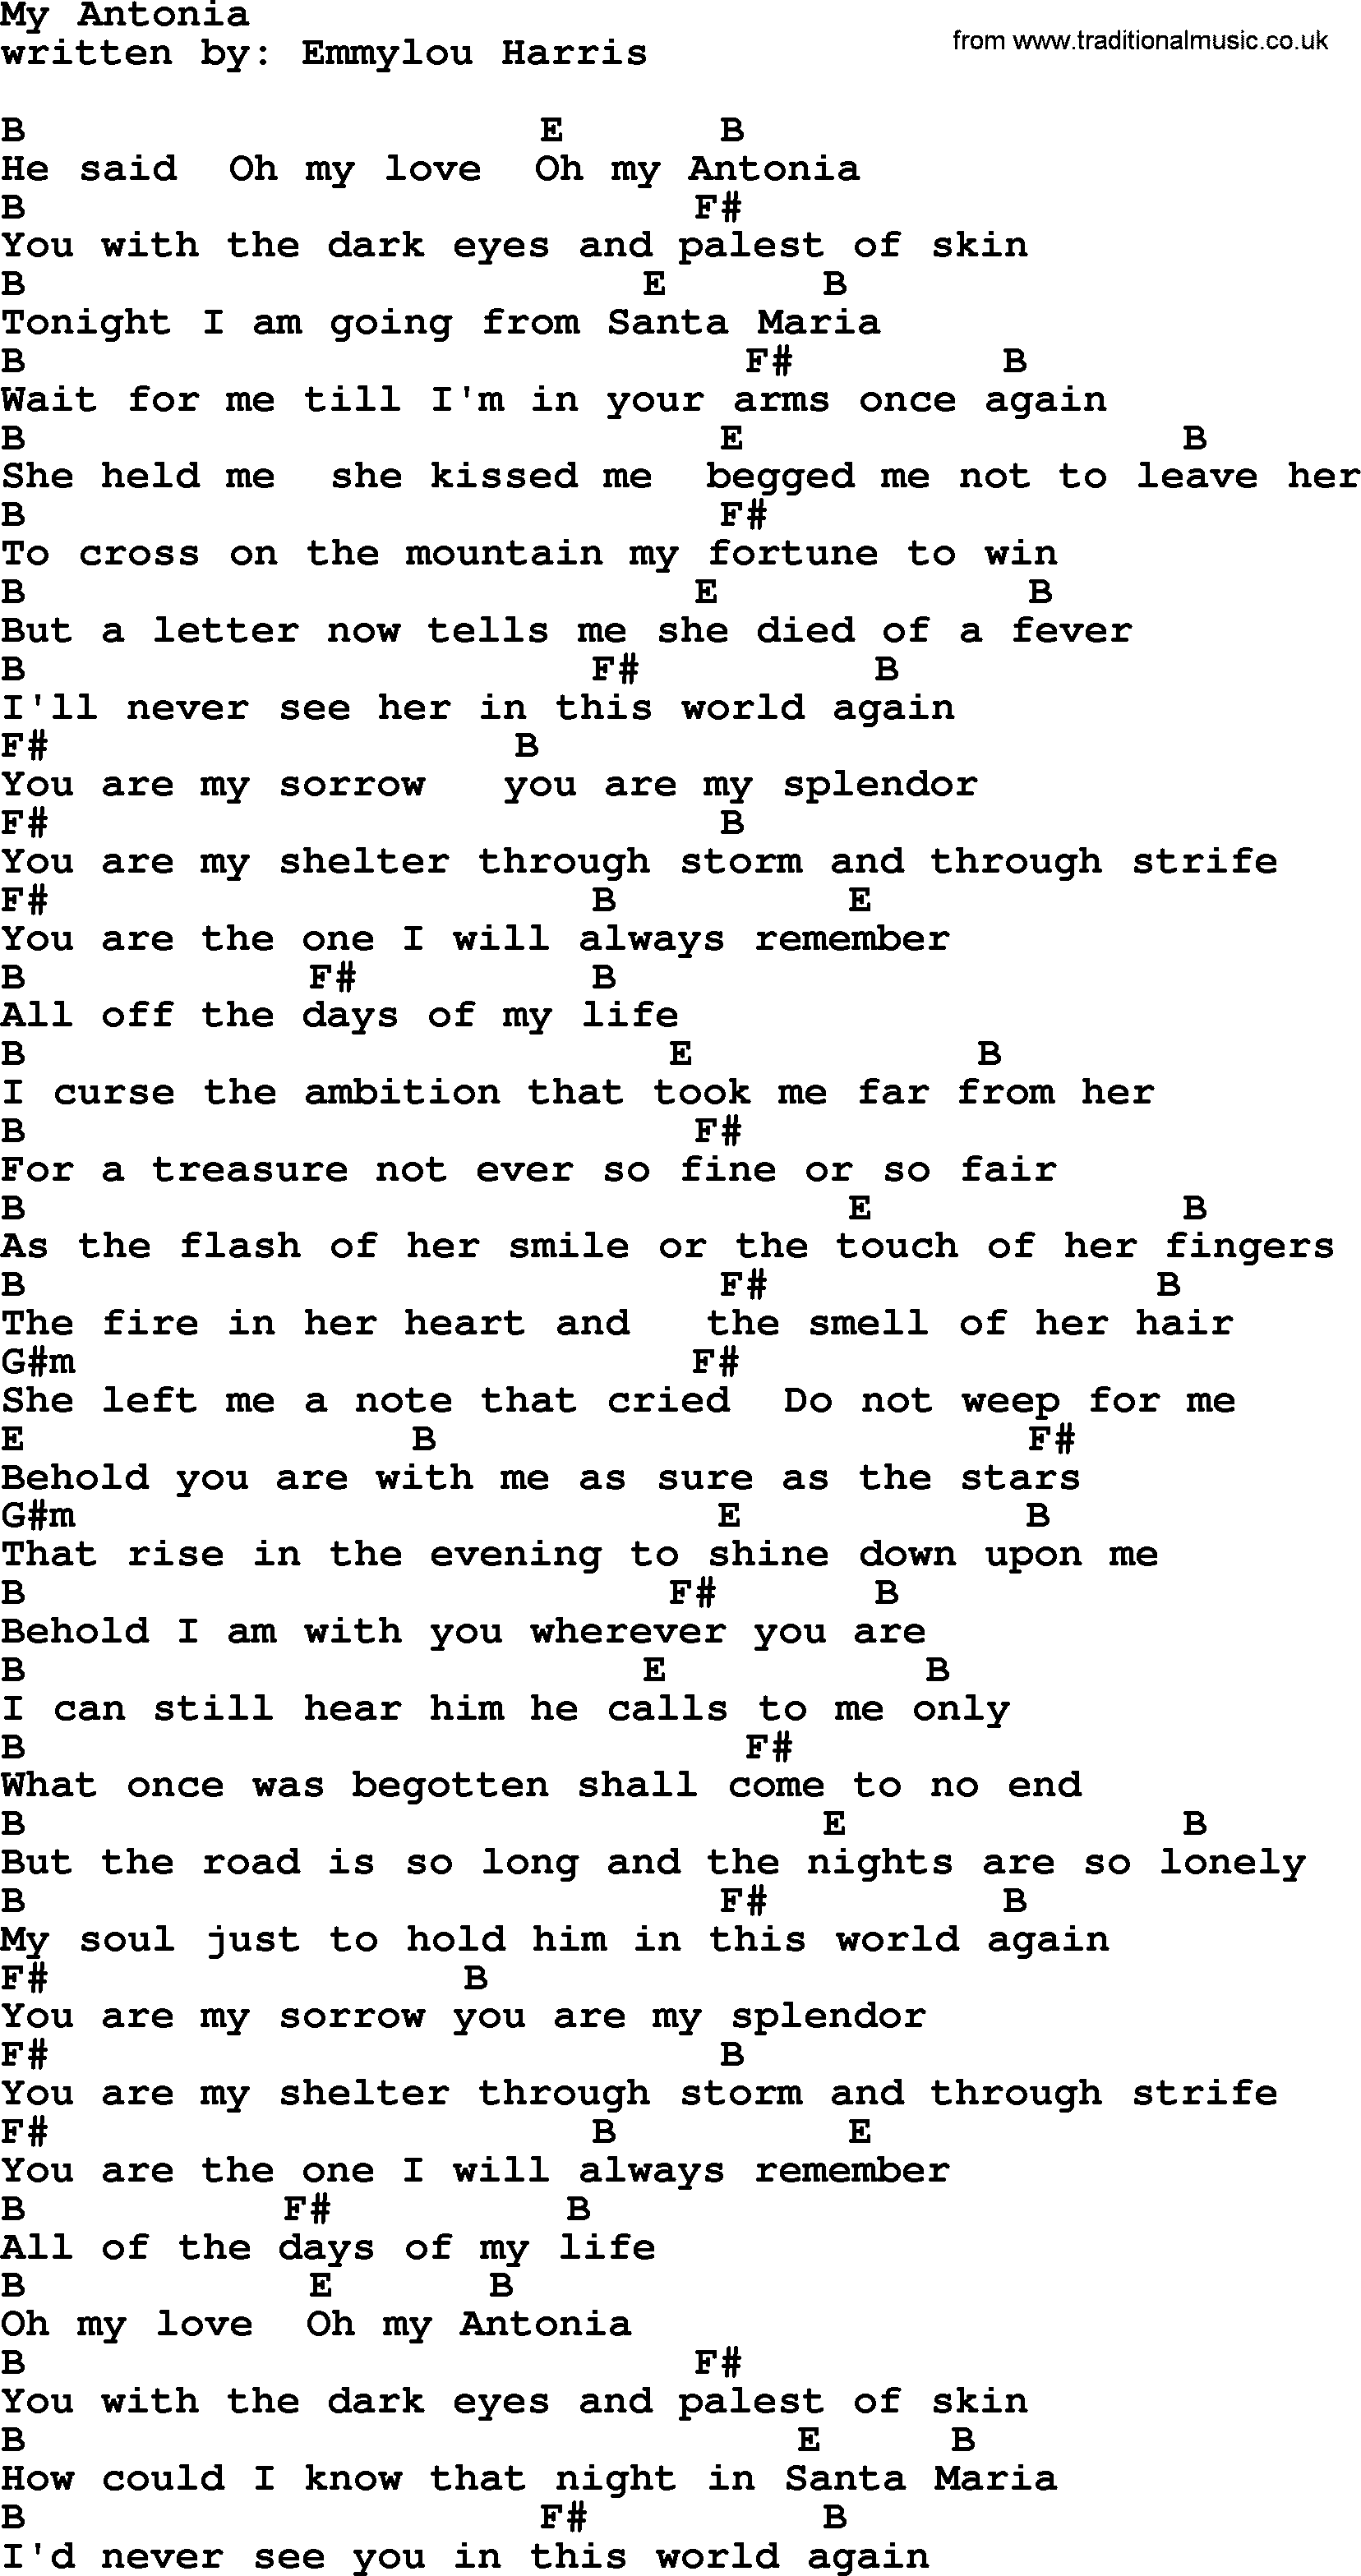 Emmylou Harris song: My Antonia lyrics and chords